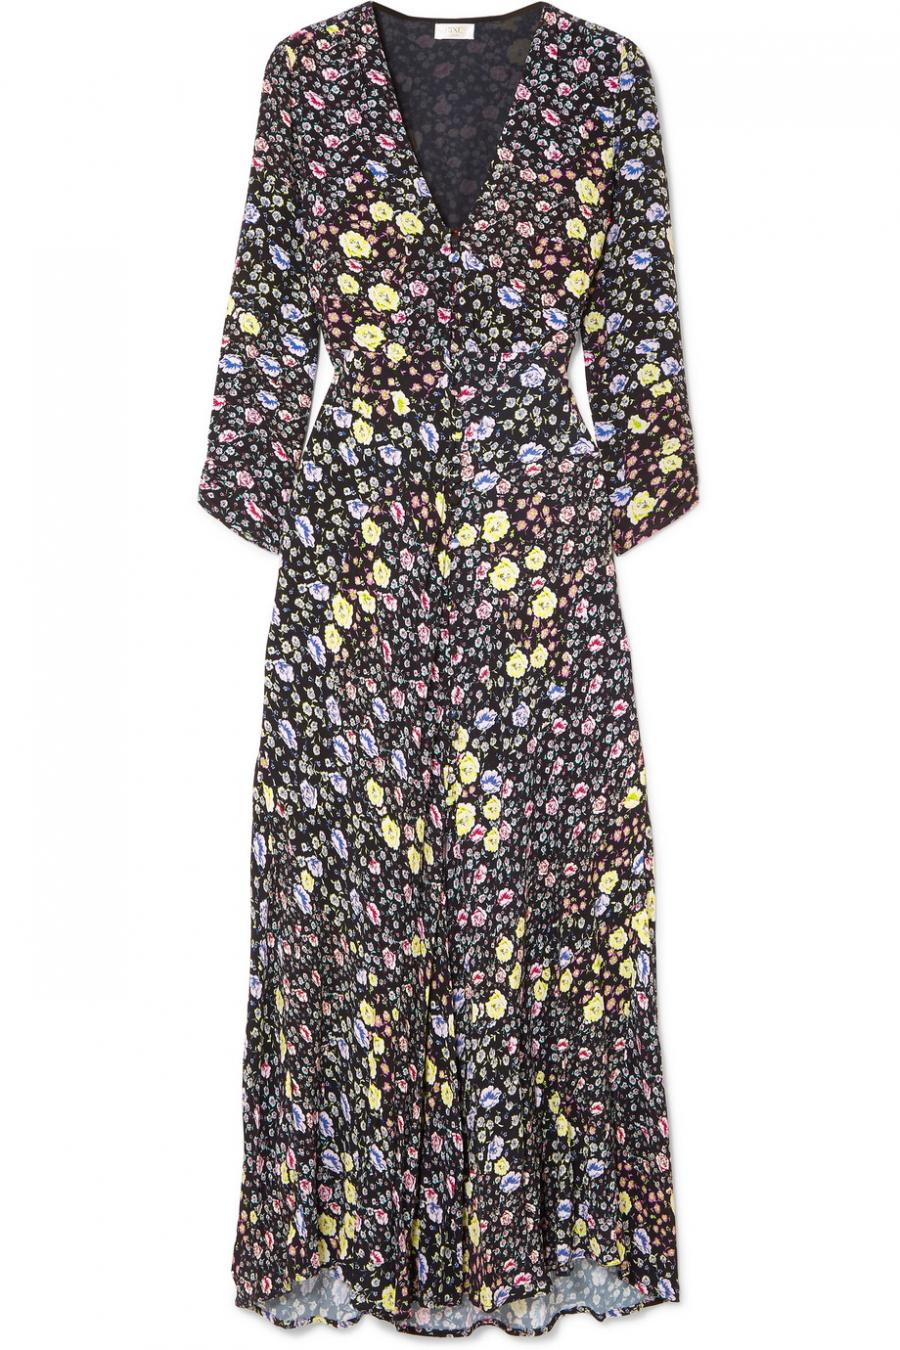 Rixo 'Katie' Micro-Floral Printed Crepe Midi Dress - Closet Upgrade